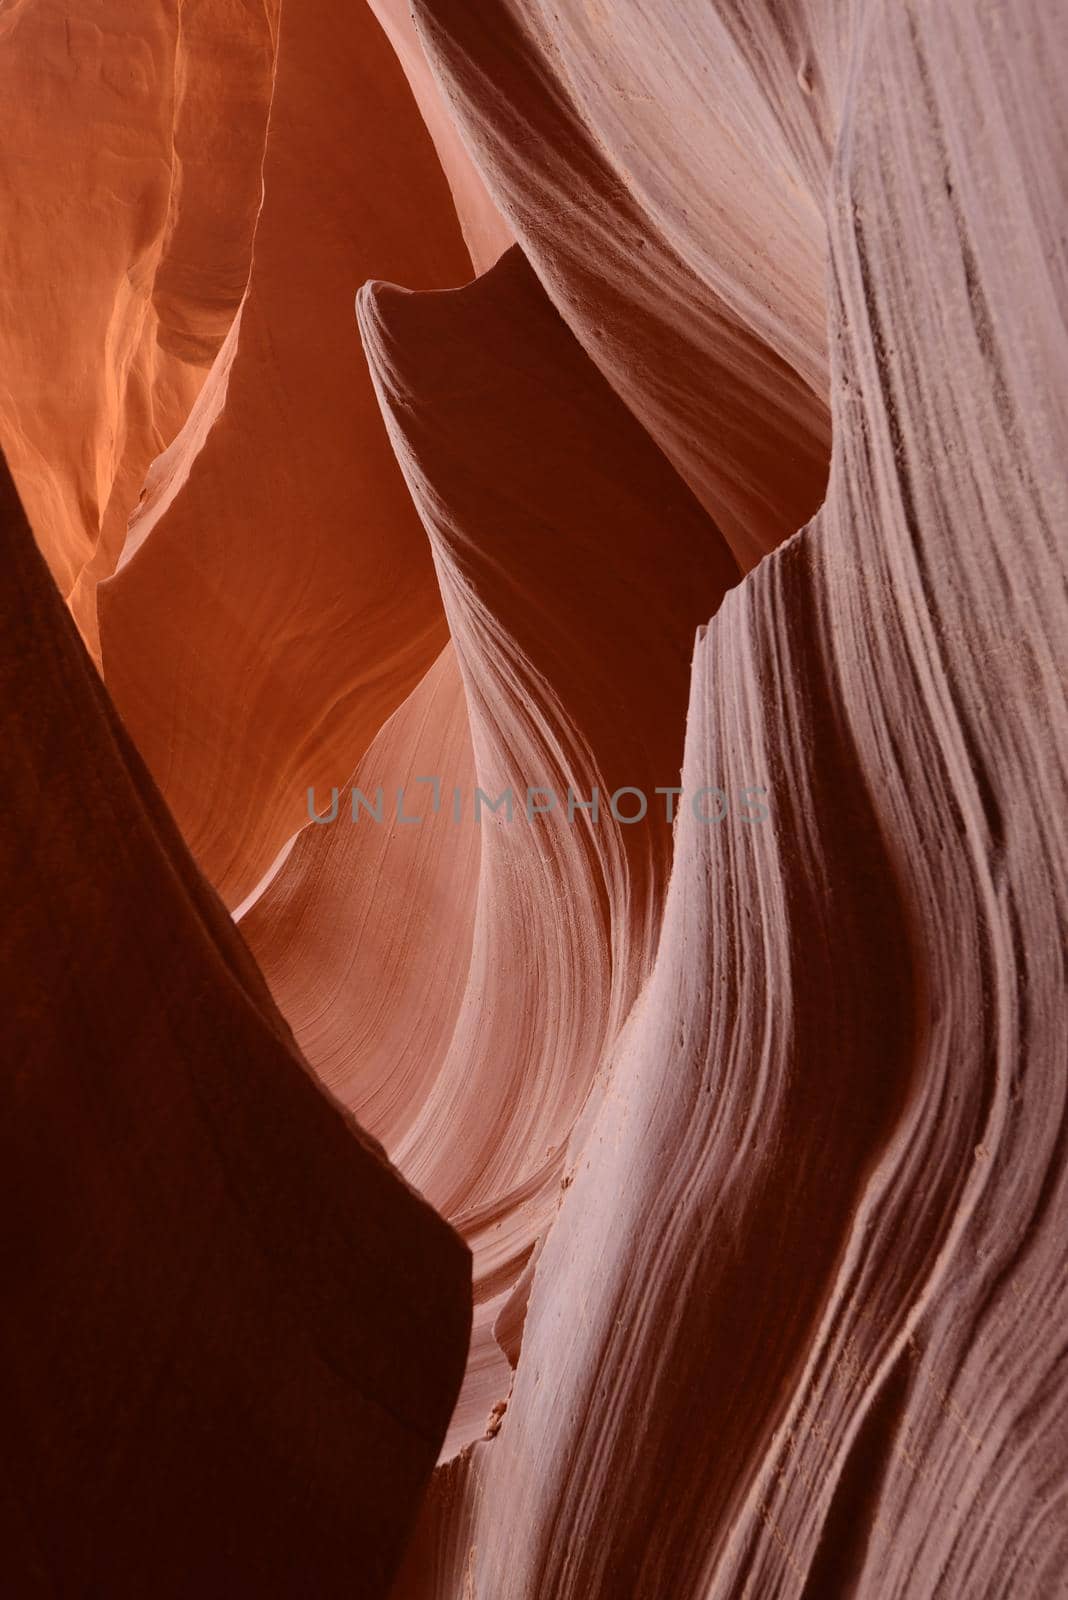 Sandstone wall in Lower Antelope Canyon, Arizona